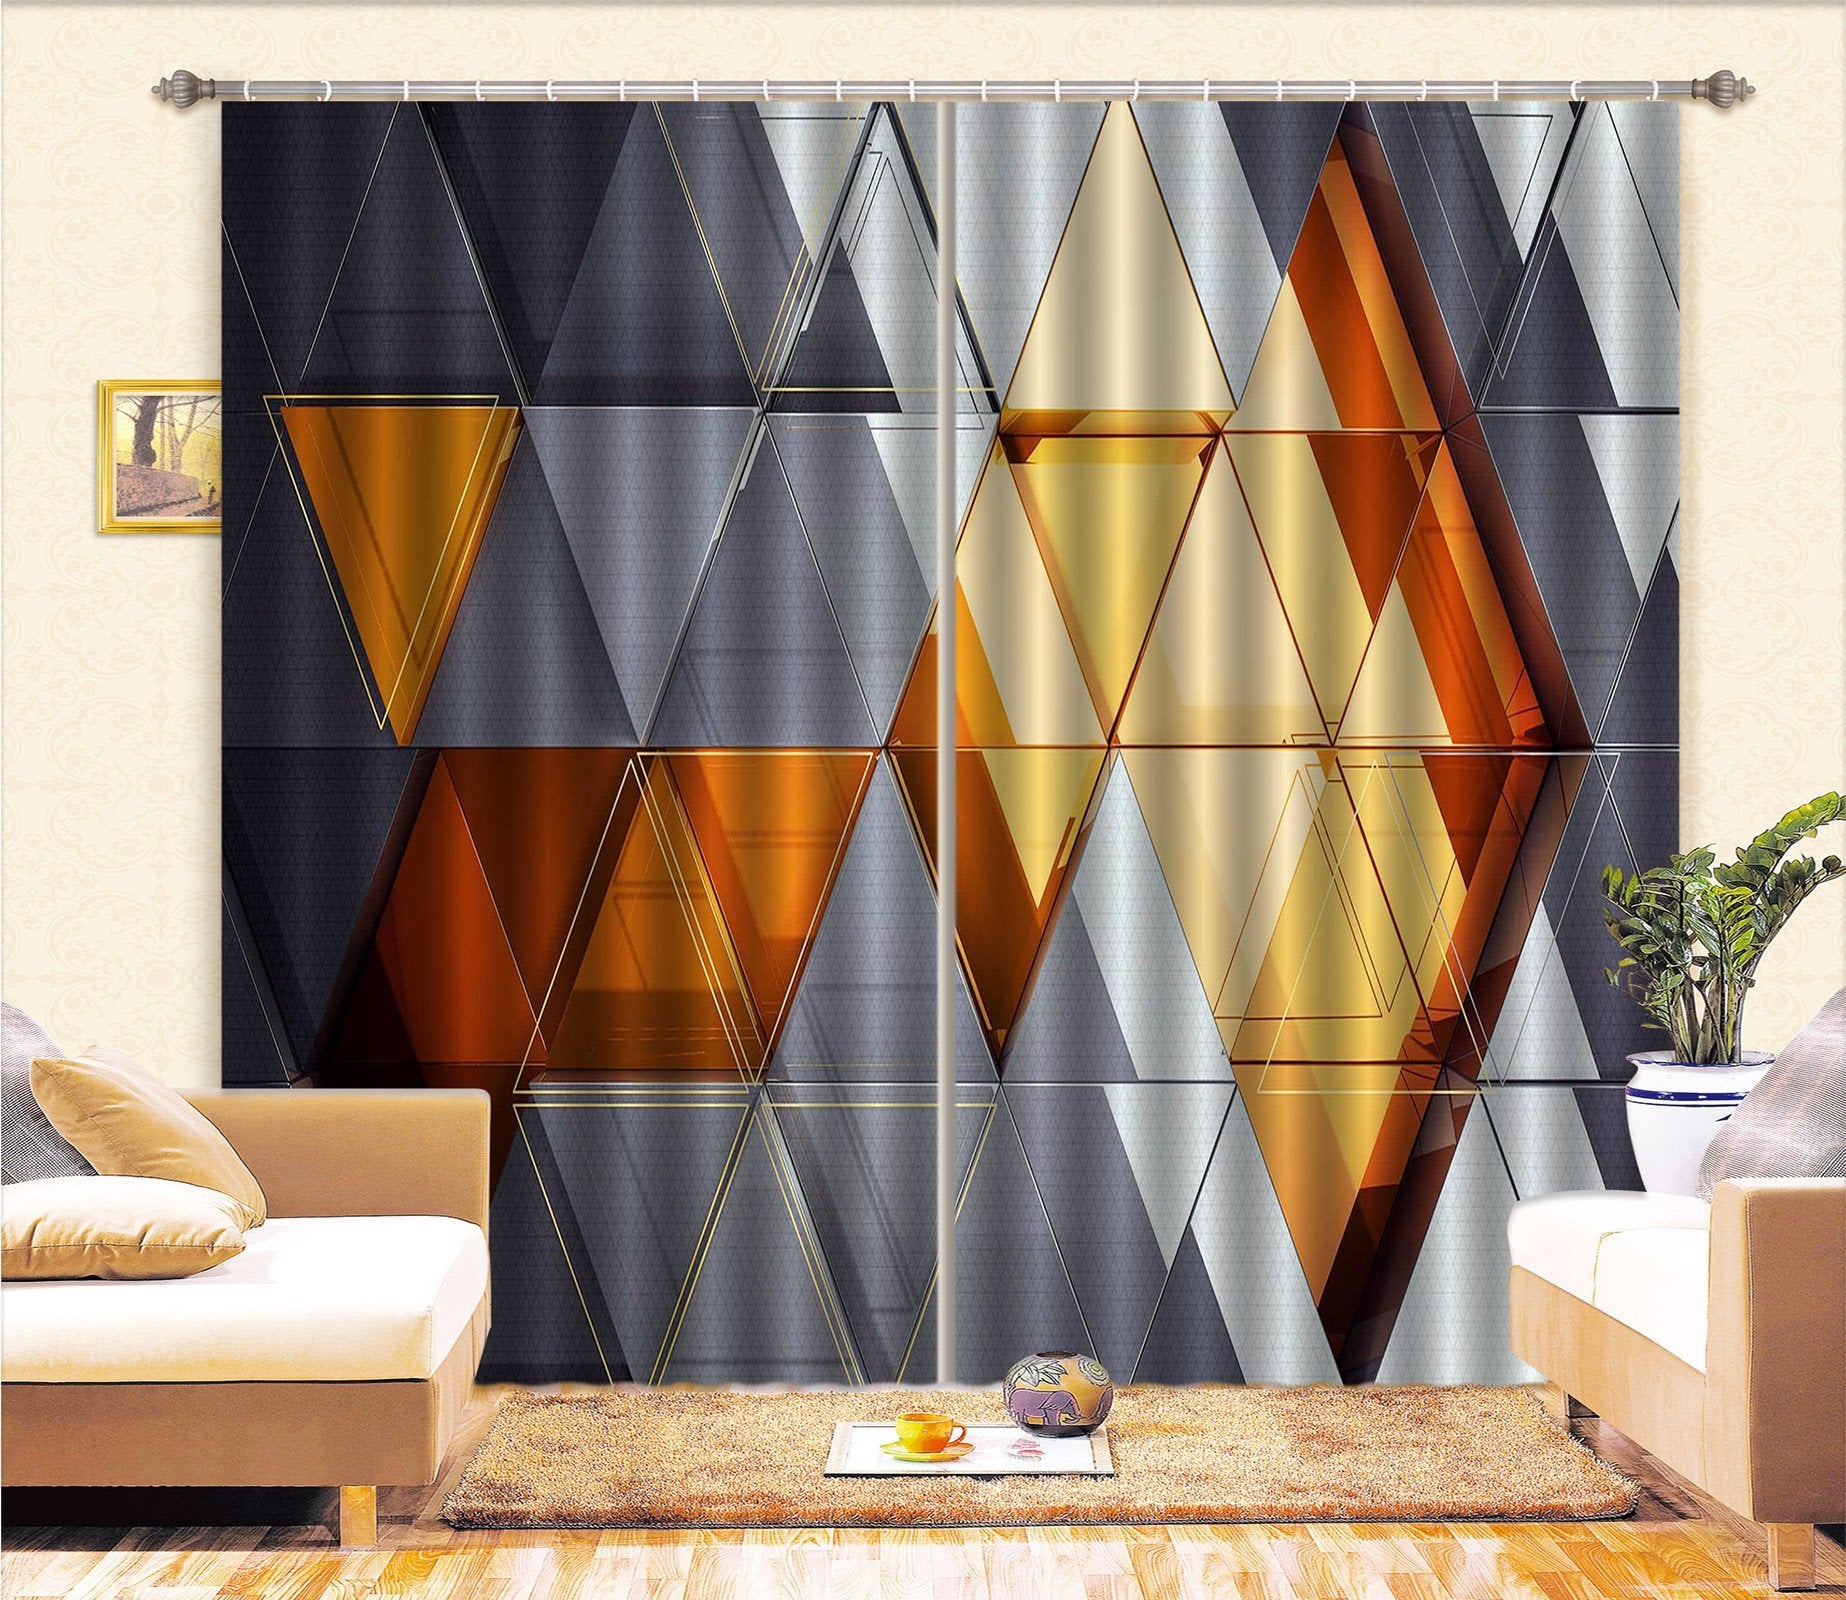 3D Triangular Stitching 25 Curtains Drapes